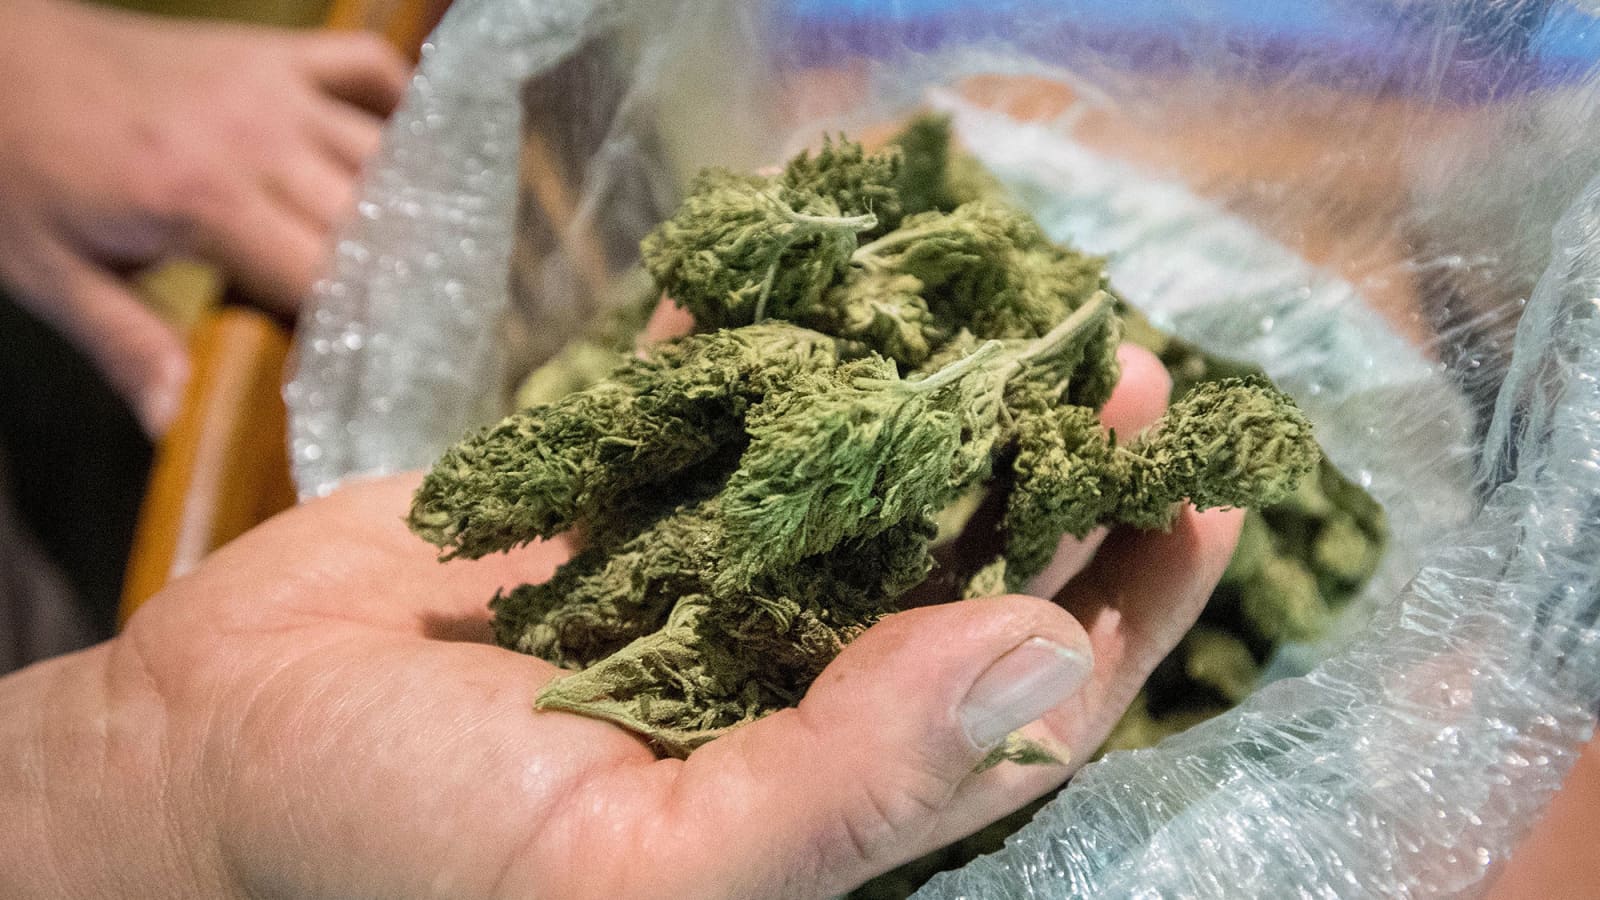 The San Francisco DA will dismiss thousands of marijuana-related convictions